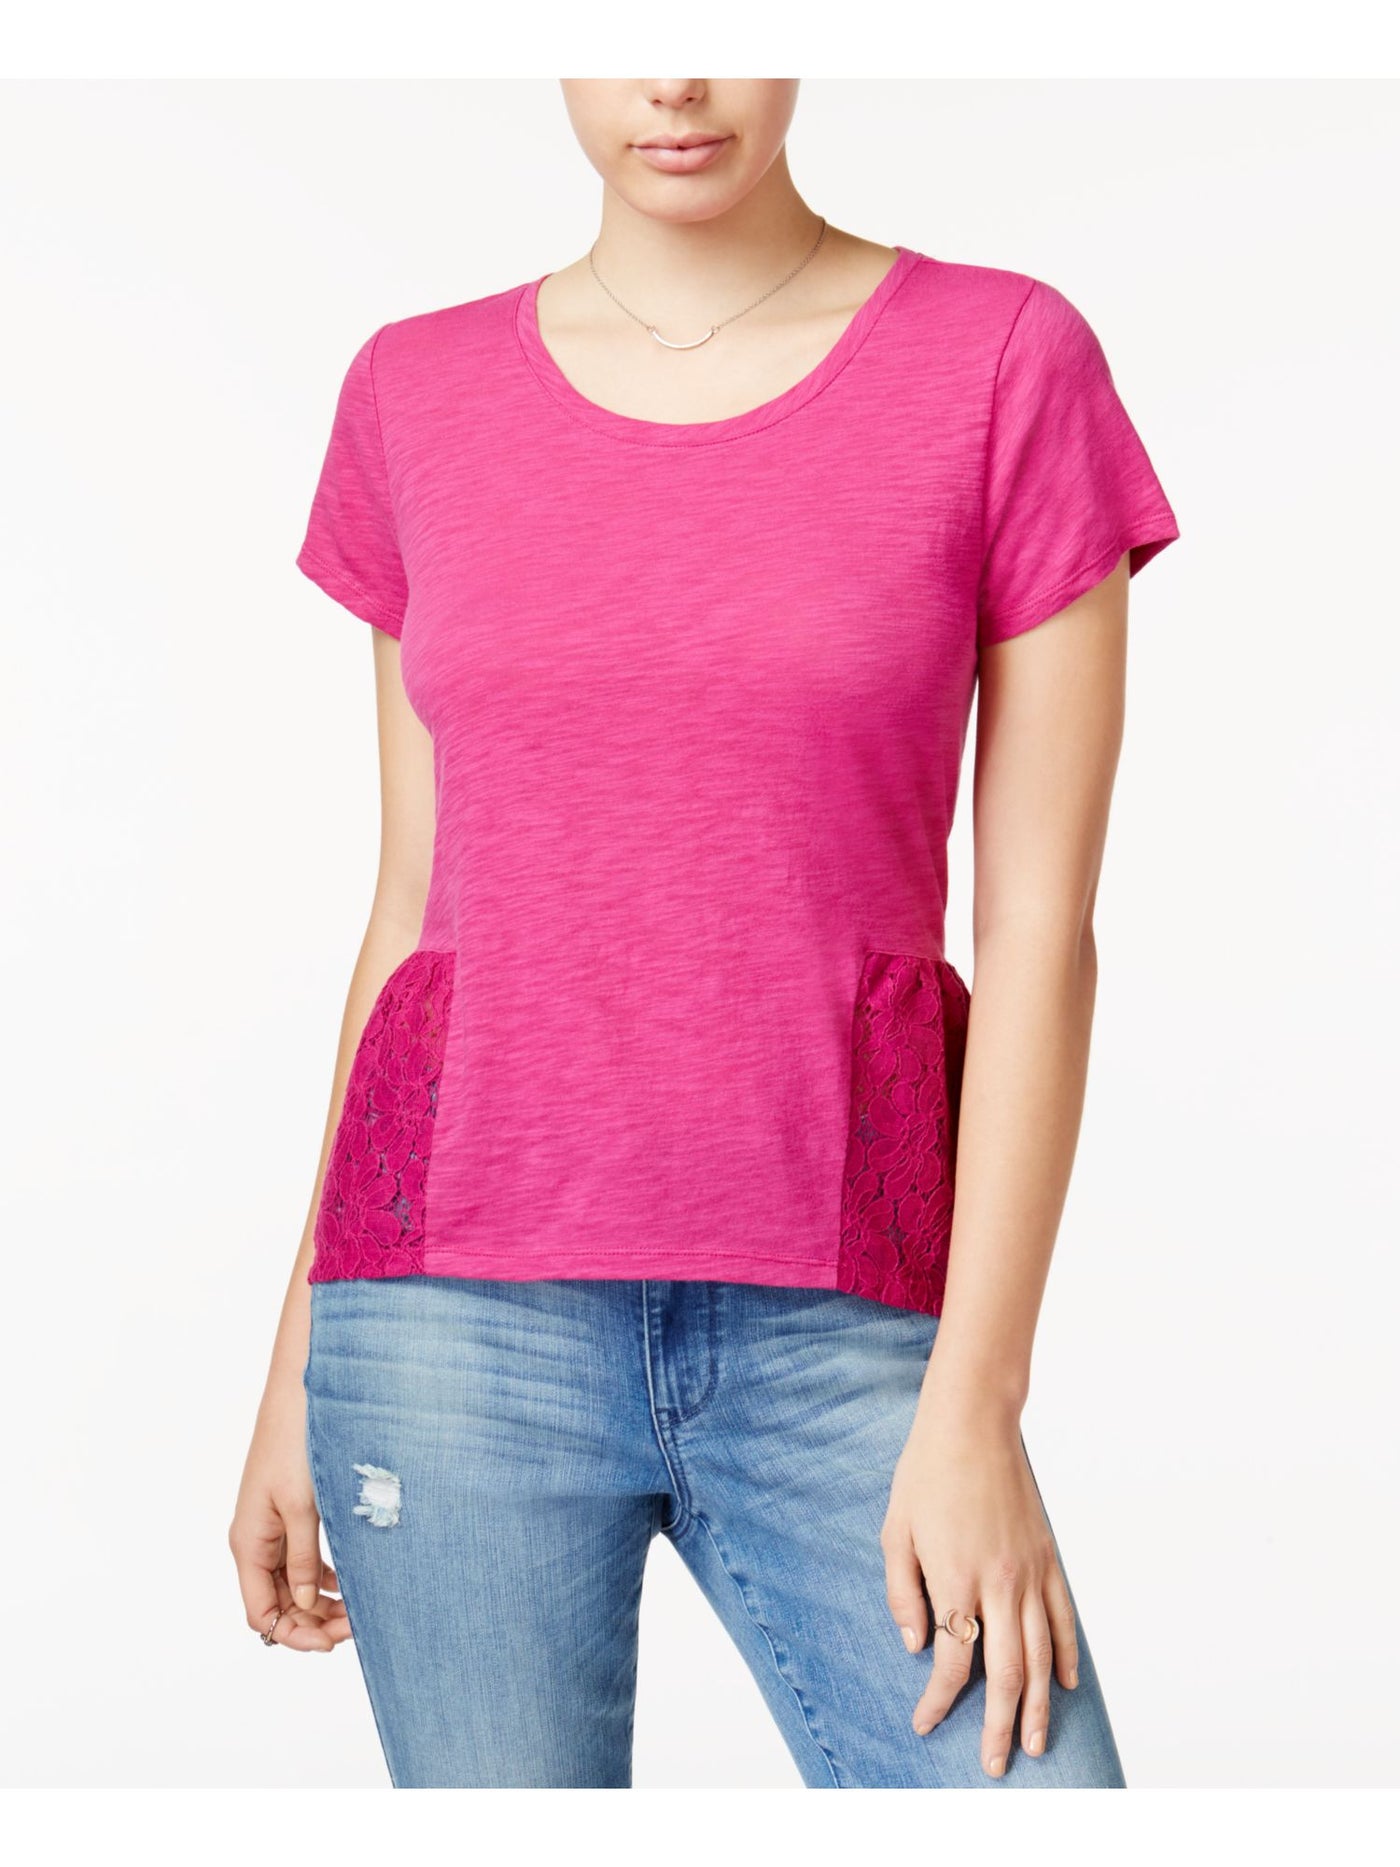 MAISON JULES Womens Pink Lace Short Sleeve Jewel Neck Top Size: XS